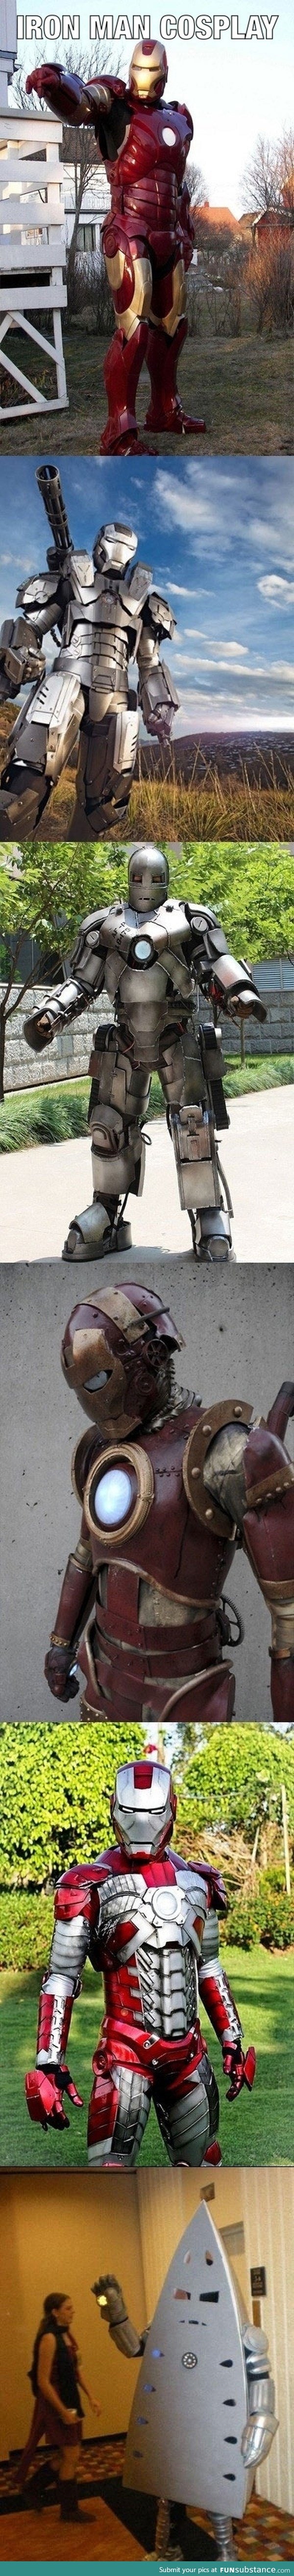 Best Iron Man cosplays